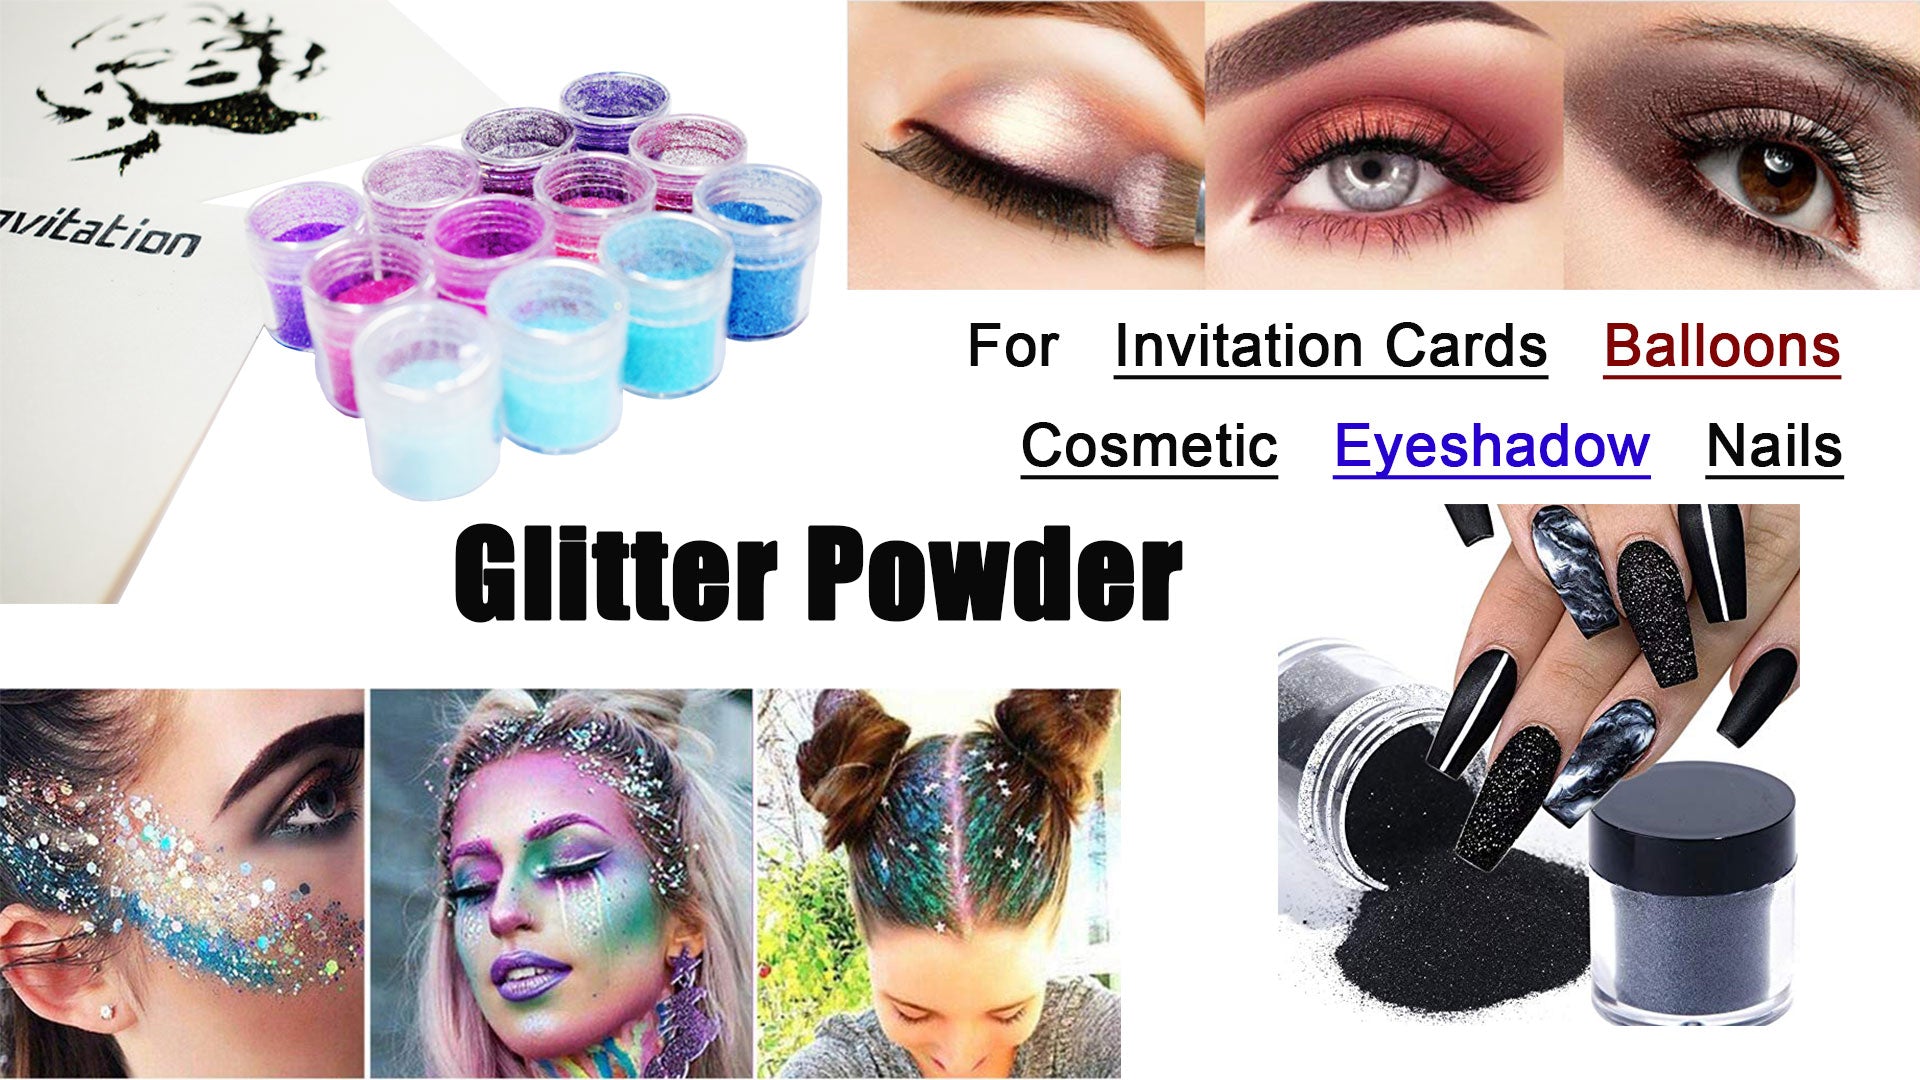 How To DIY Glitter Powder for Invitation Card, Balloon, Neil & Eyeshadow